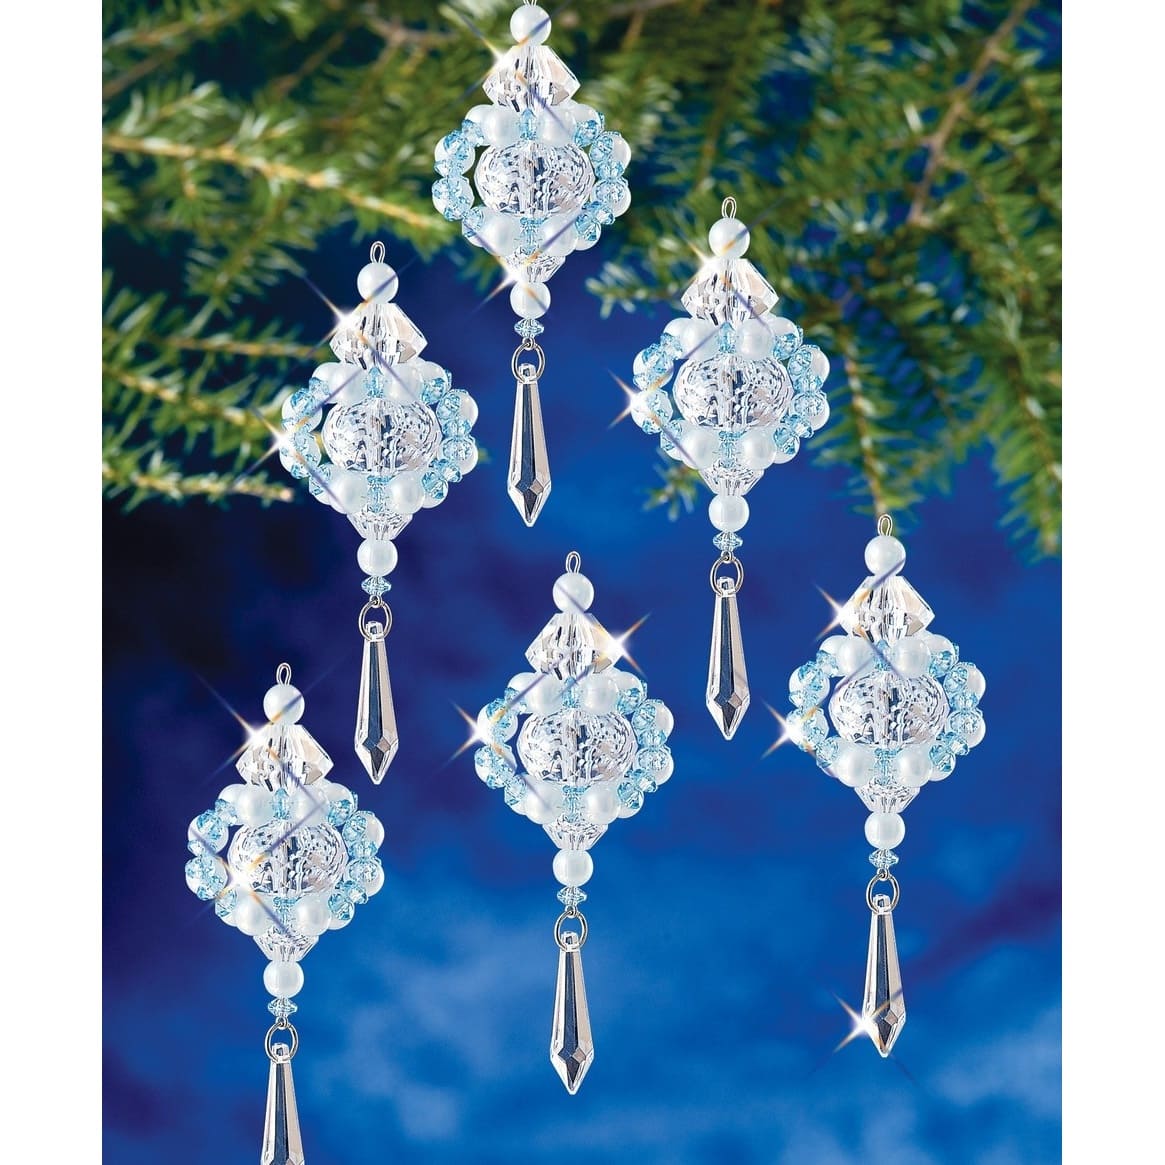 The Beadery® Winter's Elegance Snwoflake Holiday Beaded Ornament Kit ...